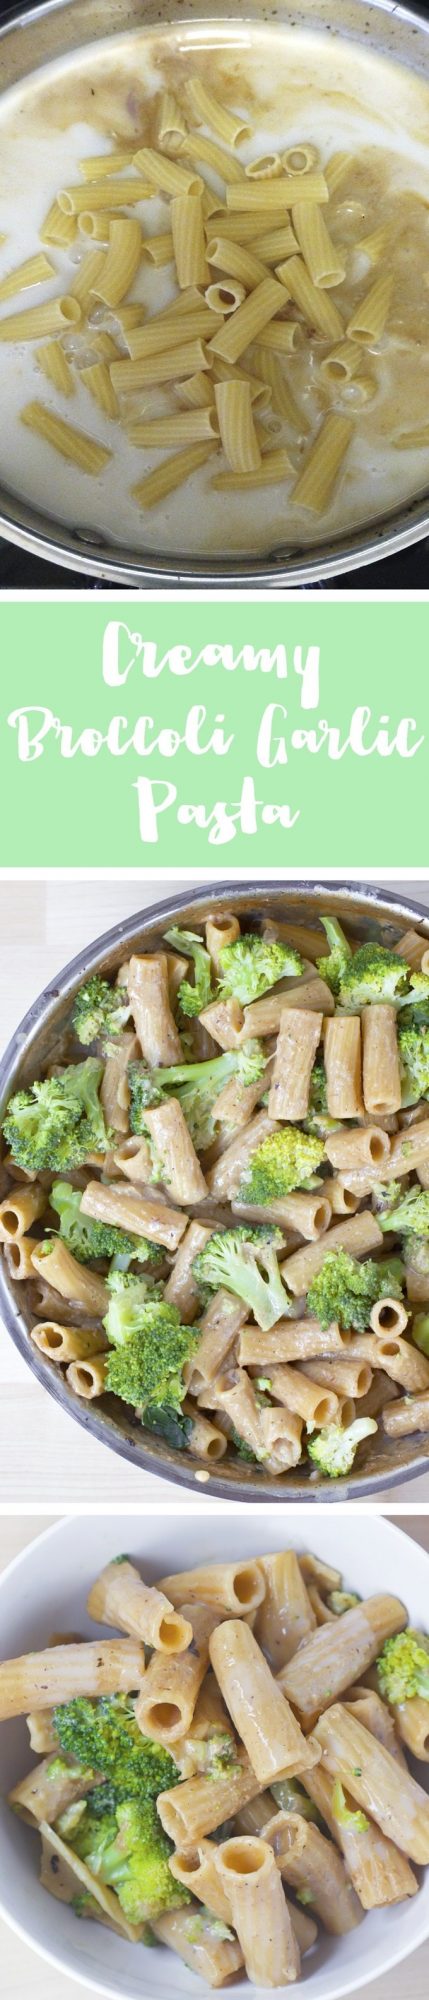 Garlic Pasta - Ingredients: 3 cups broccoli, 2 tbsp minced garlic, 2 1/2 tsp... Full recipe: https://chocolatecoveredkatie.com/2016/08/15/garlic-pasta-broccoli-vegan/ @choccoveredkt